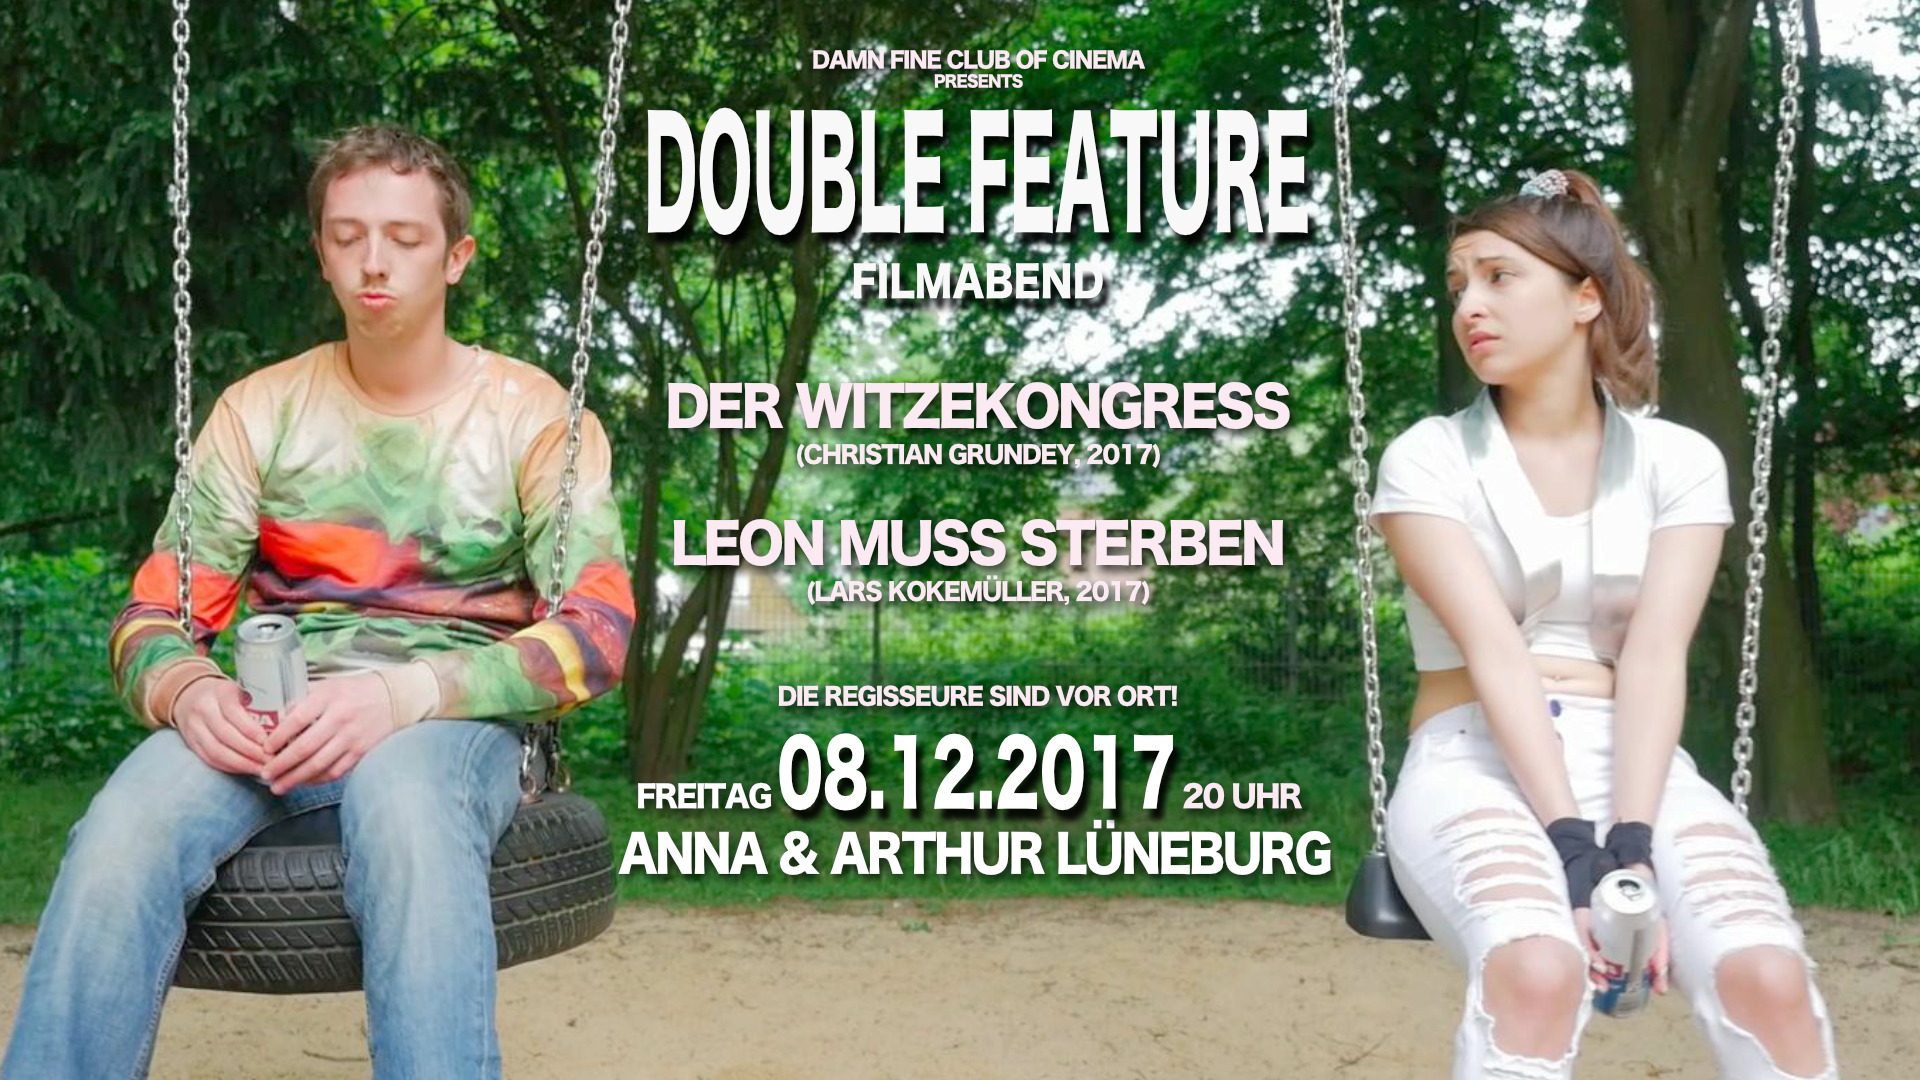 Freitag 08 Dezember Double Feature Filmabend Der Witzekongress And Leon Muss Sterben Anna